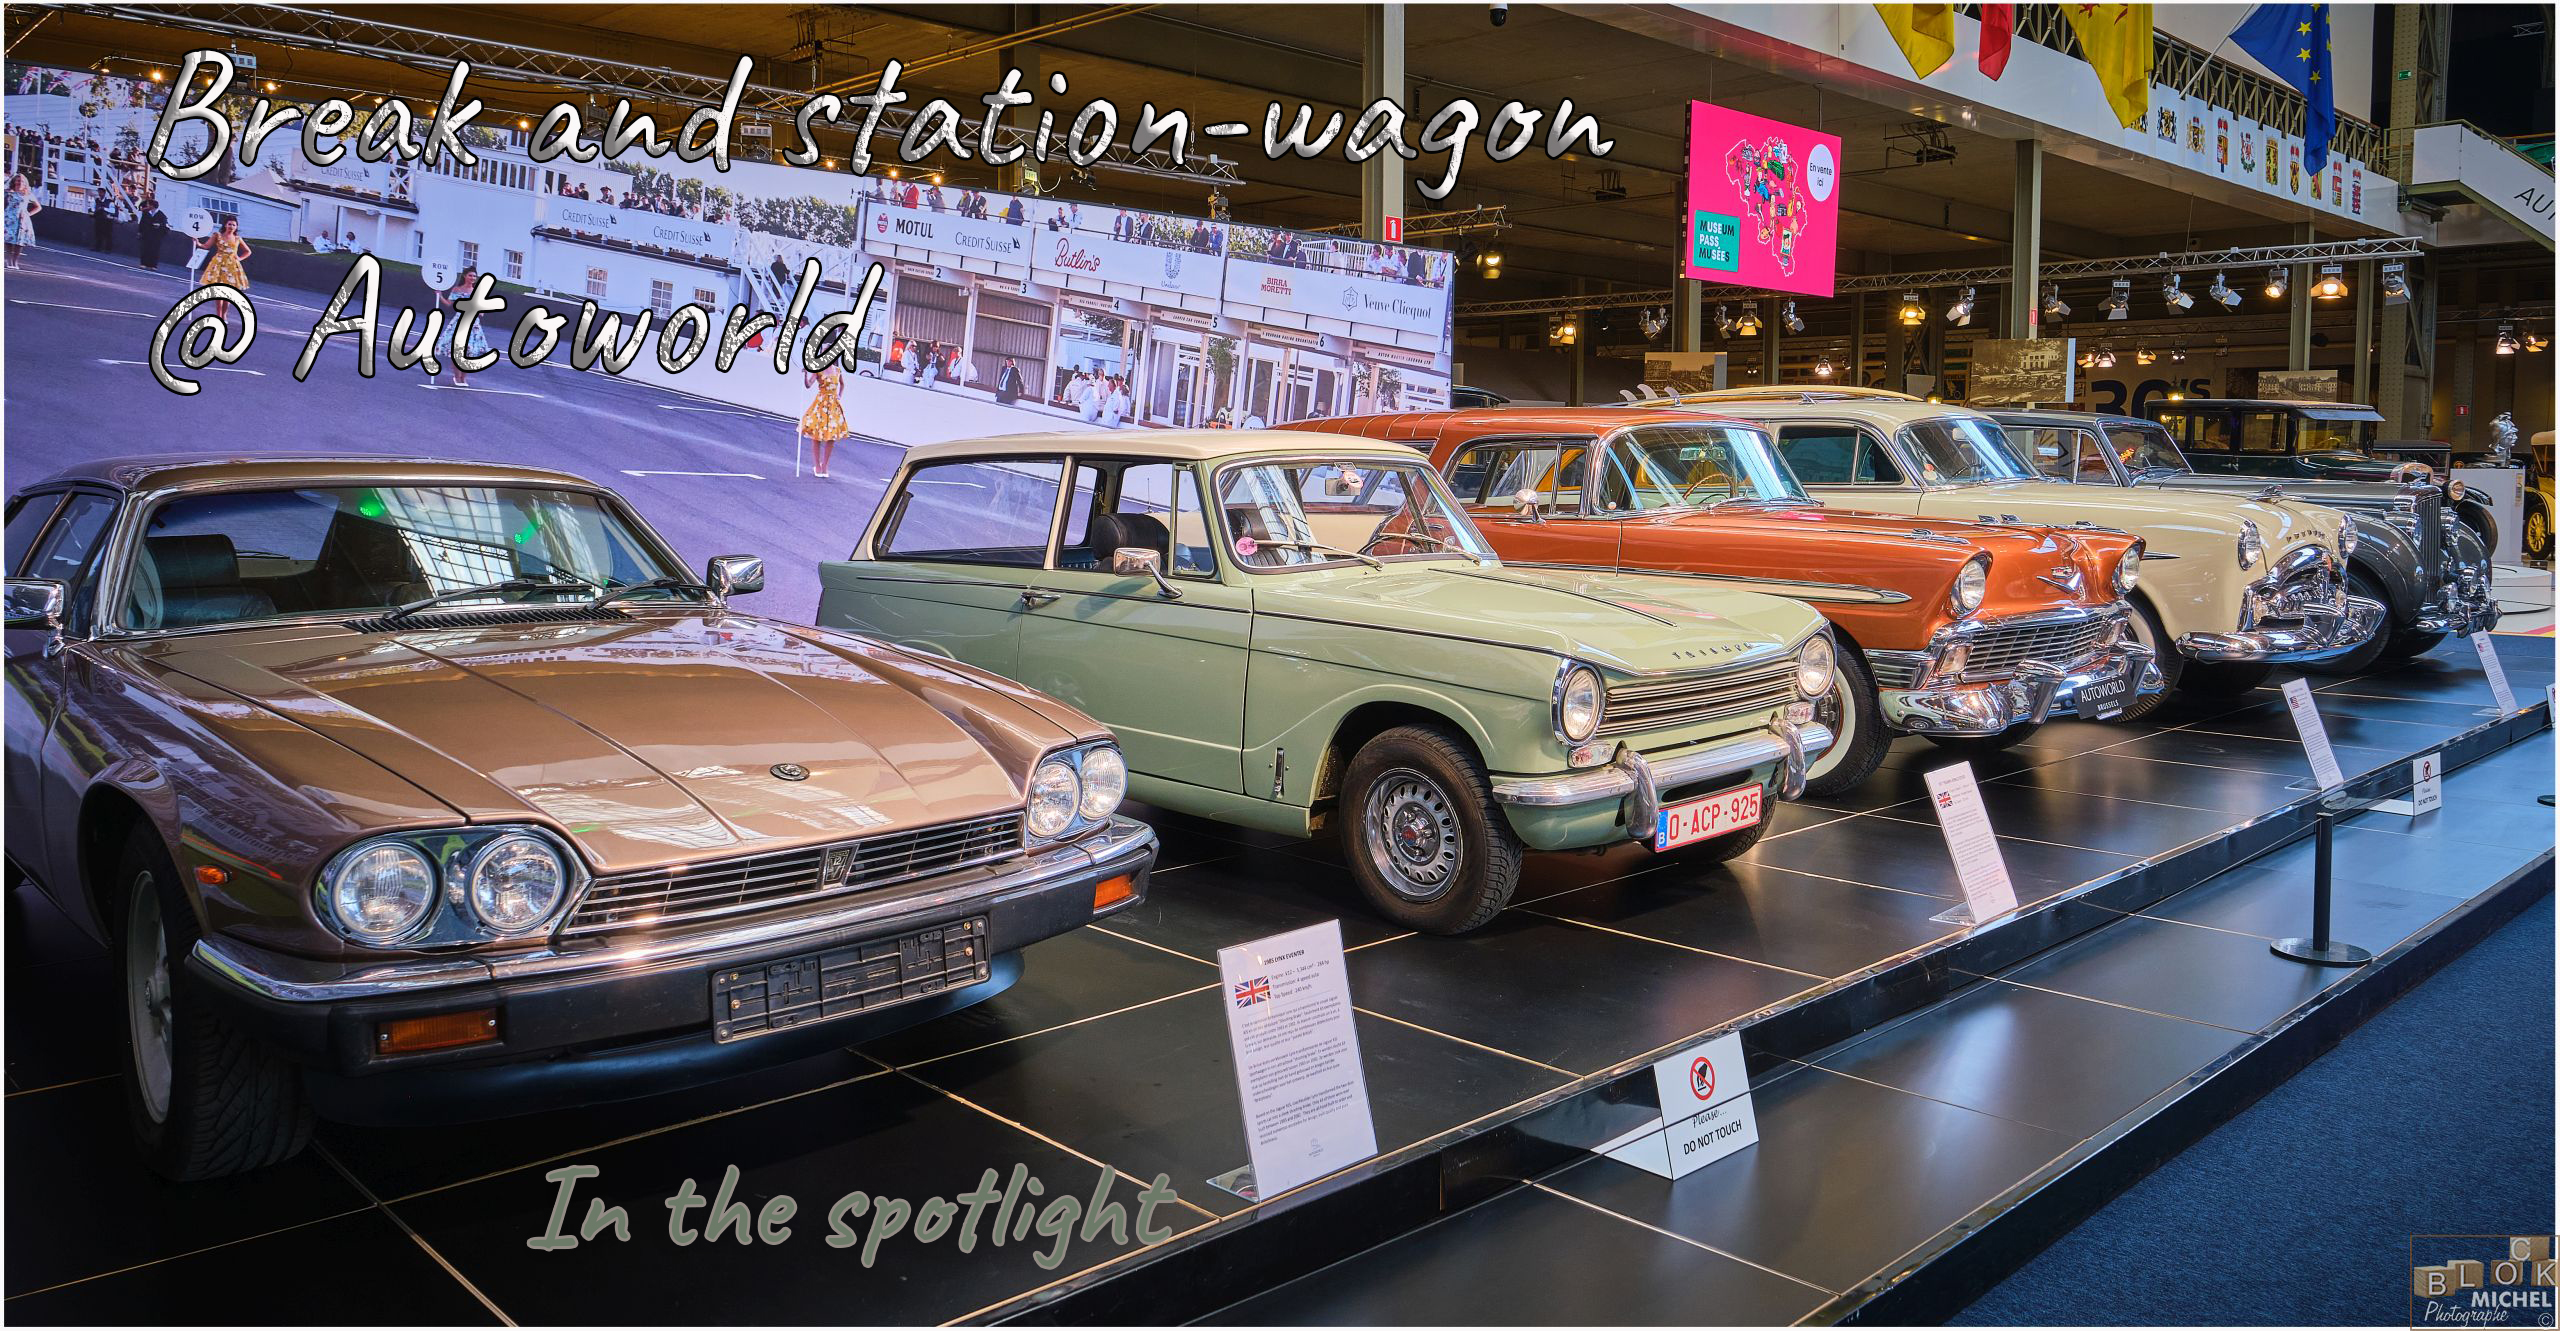 Break & Station wagon story @ Autoworld